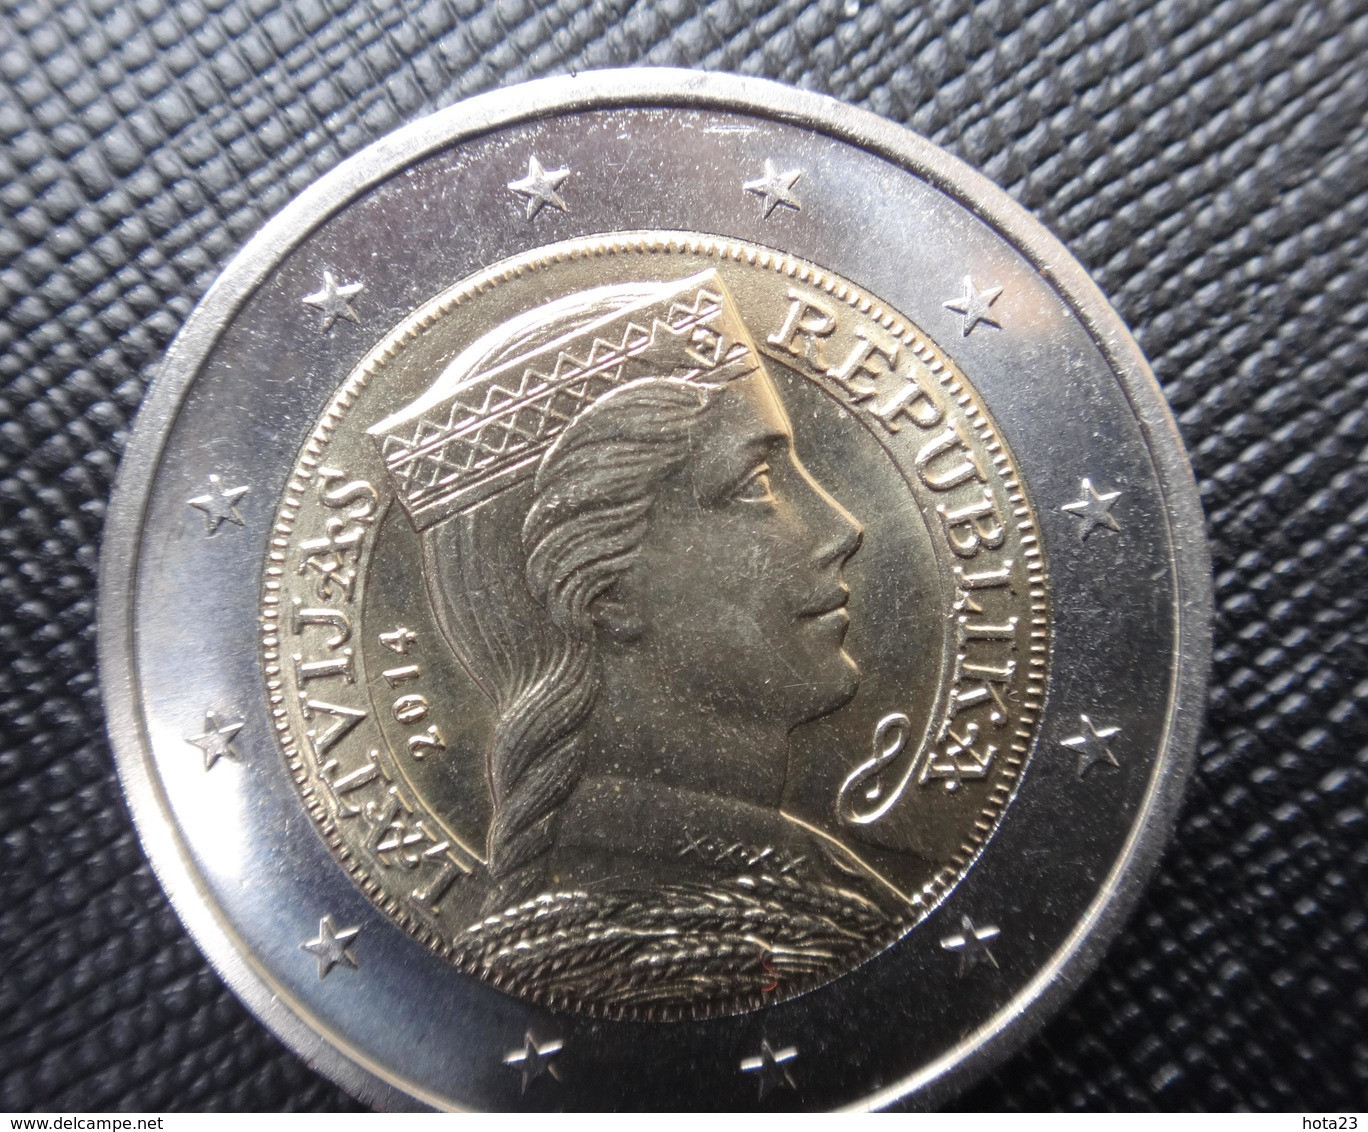 LETTLAND 2 EURO Kursmünze MÜNZEN 2014 Jahre LATVIA COIN  CIRCULATED - Latvia